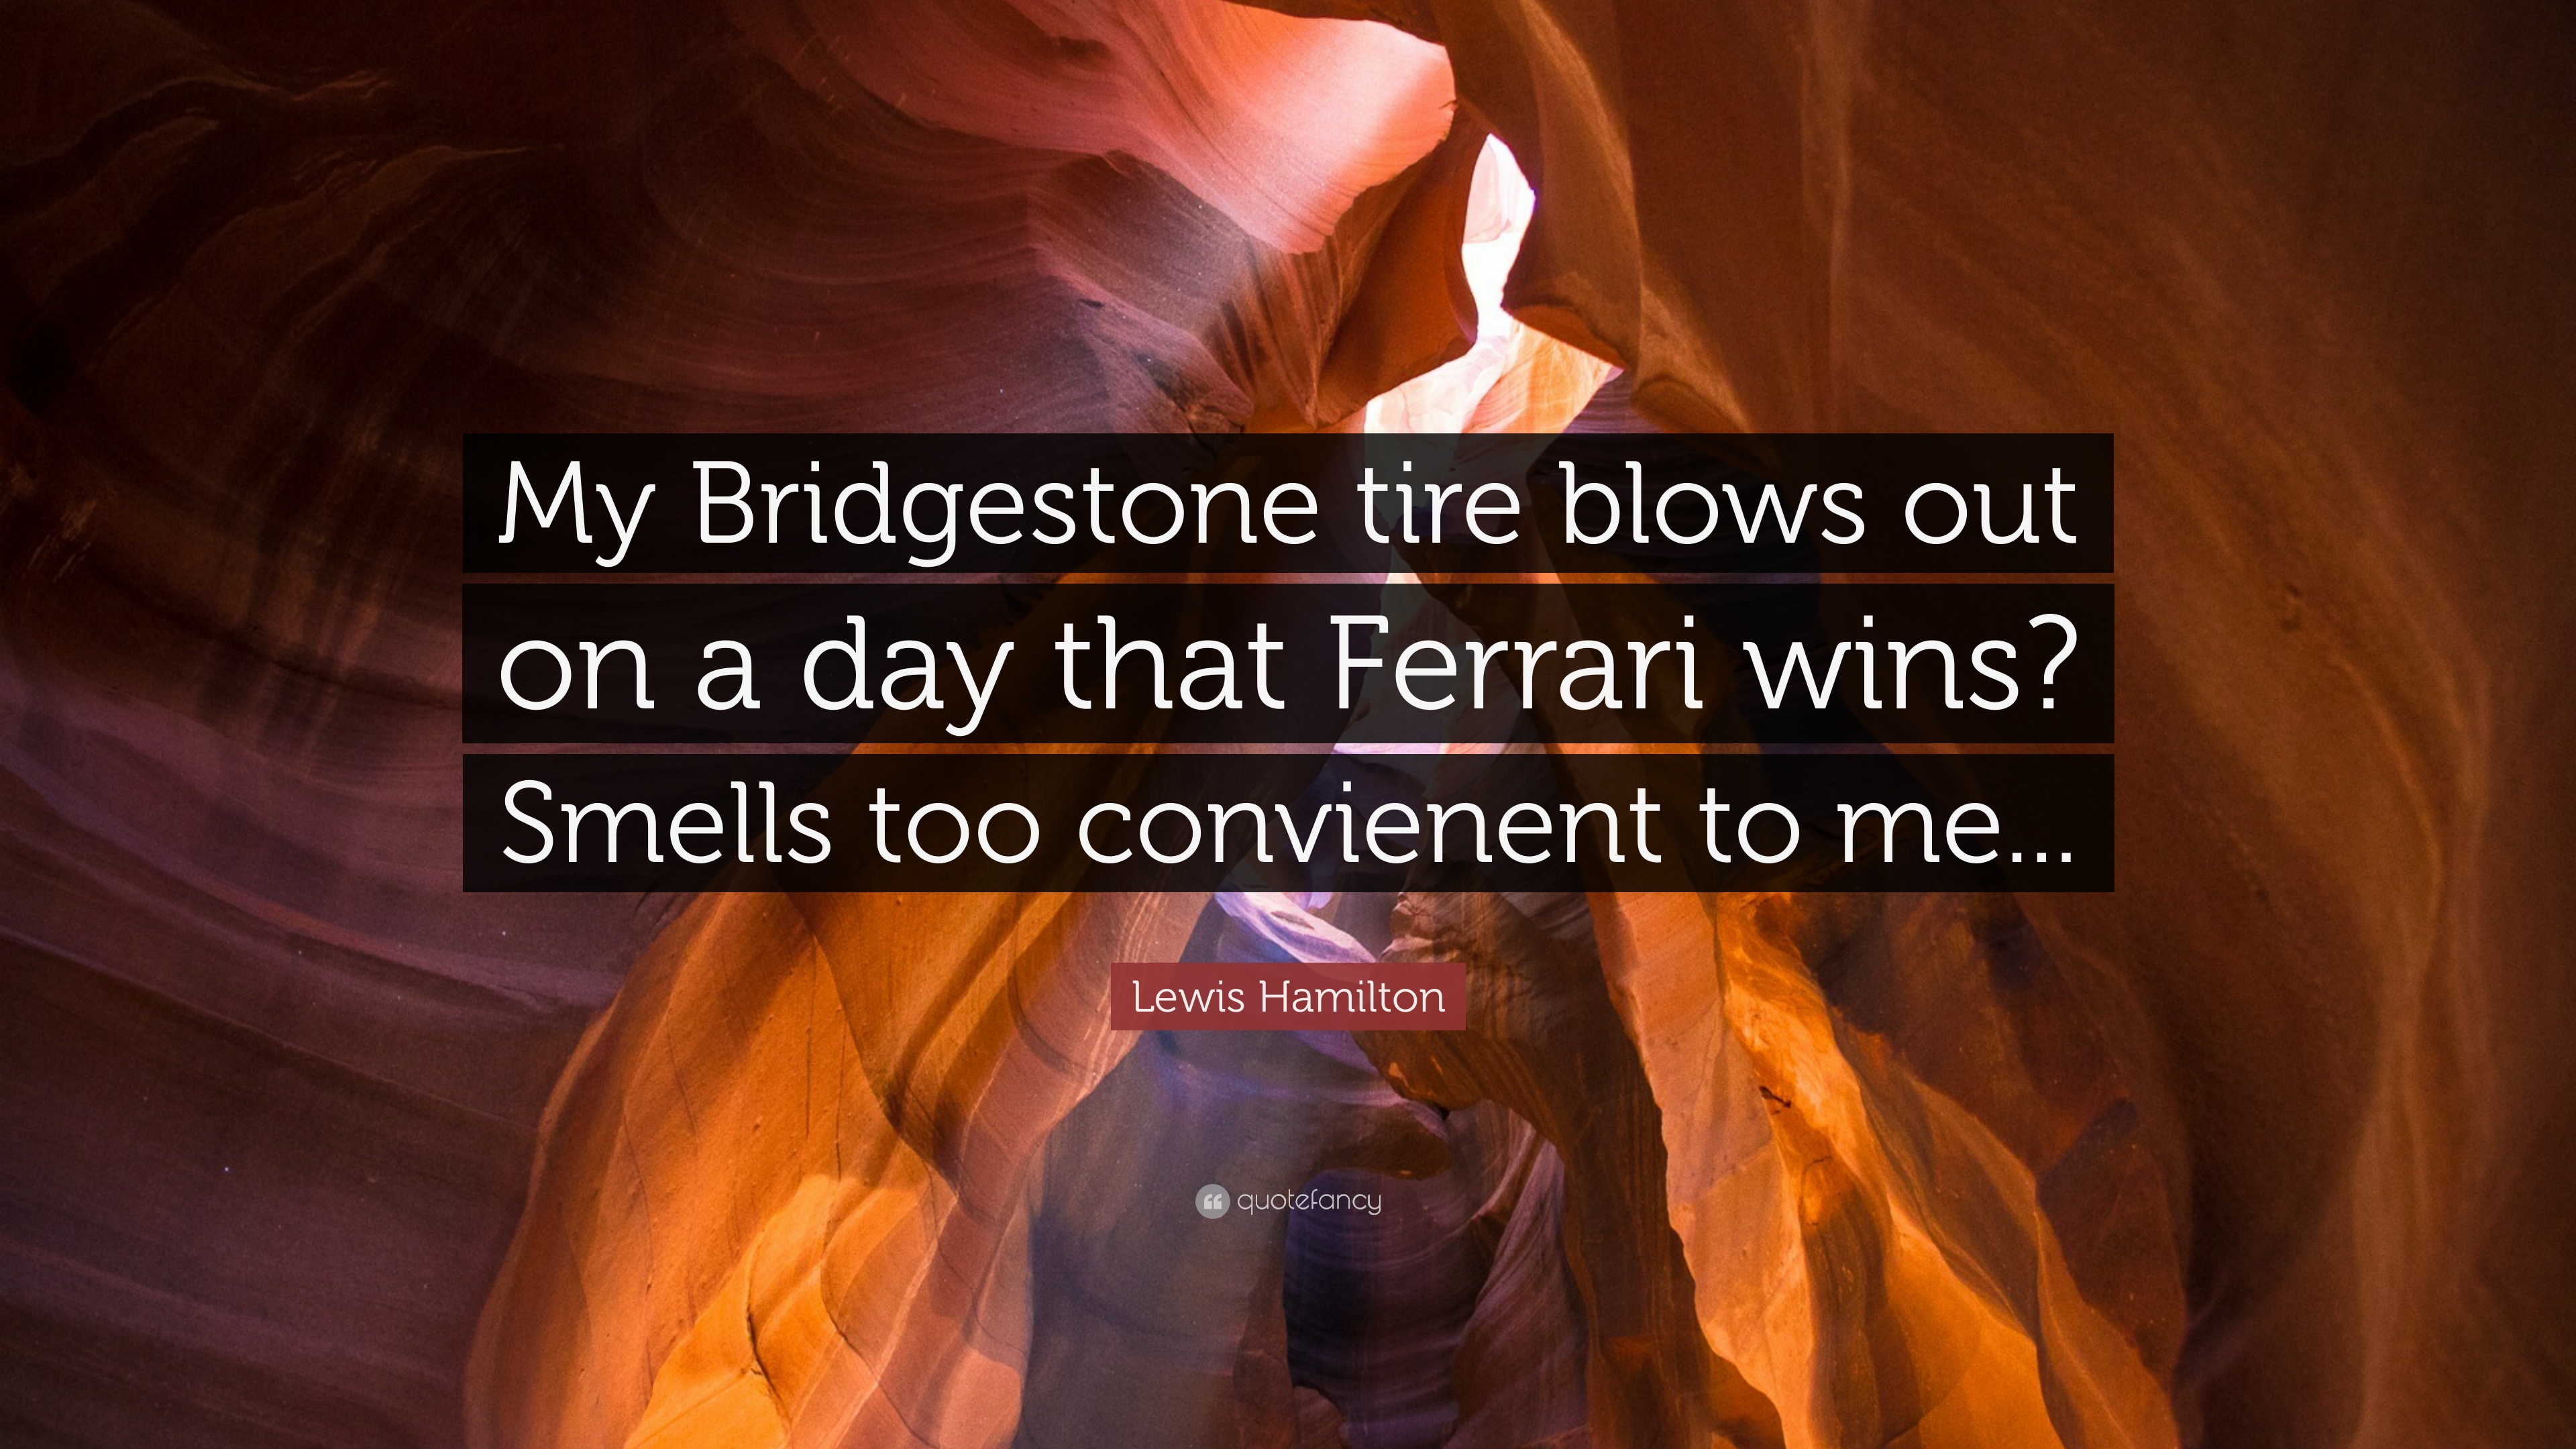 Lewis Hamilton Quote: “My Bridgestone tire blows out on a